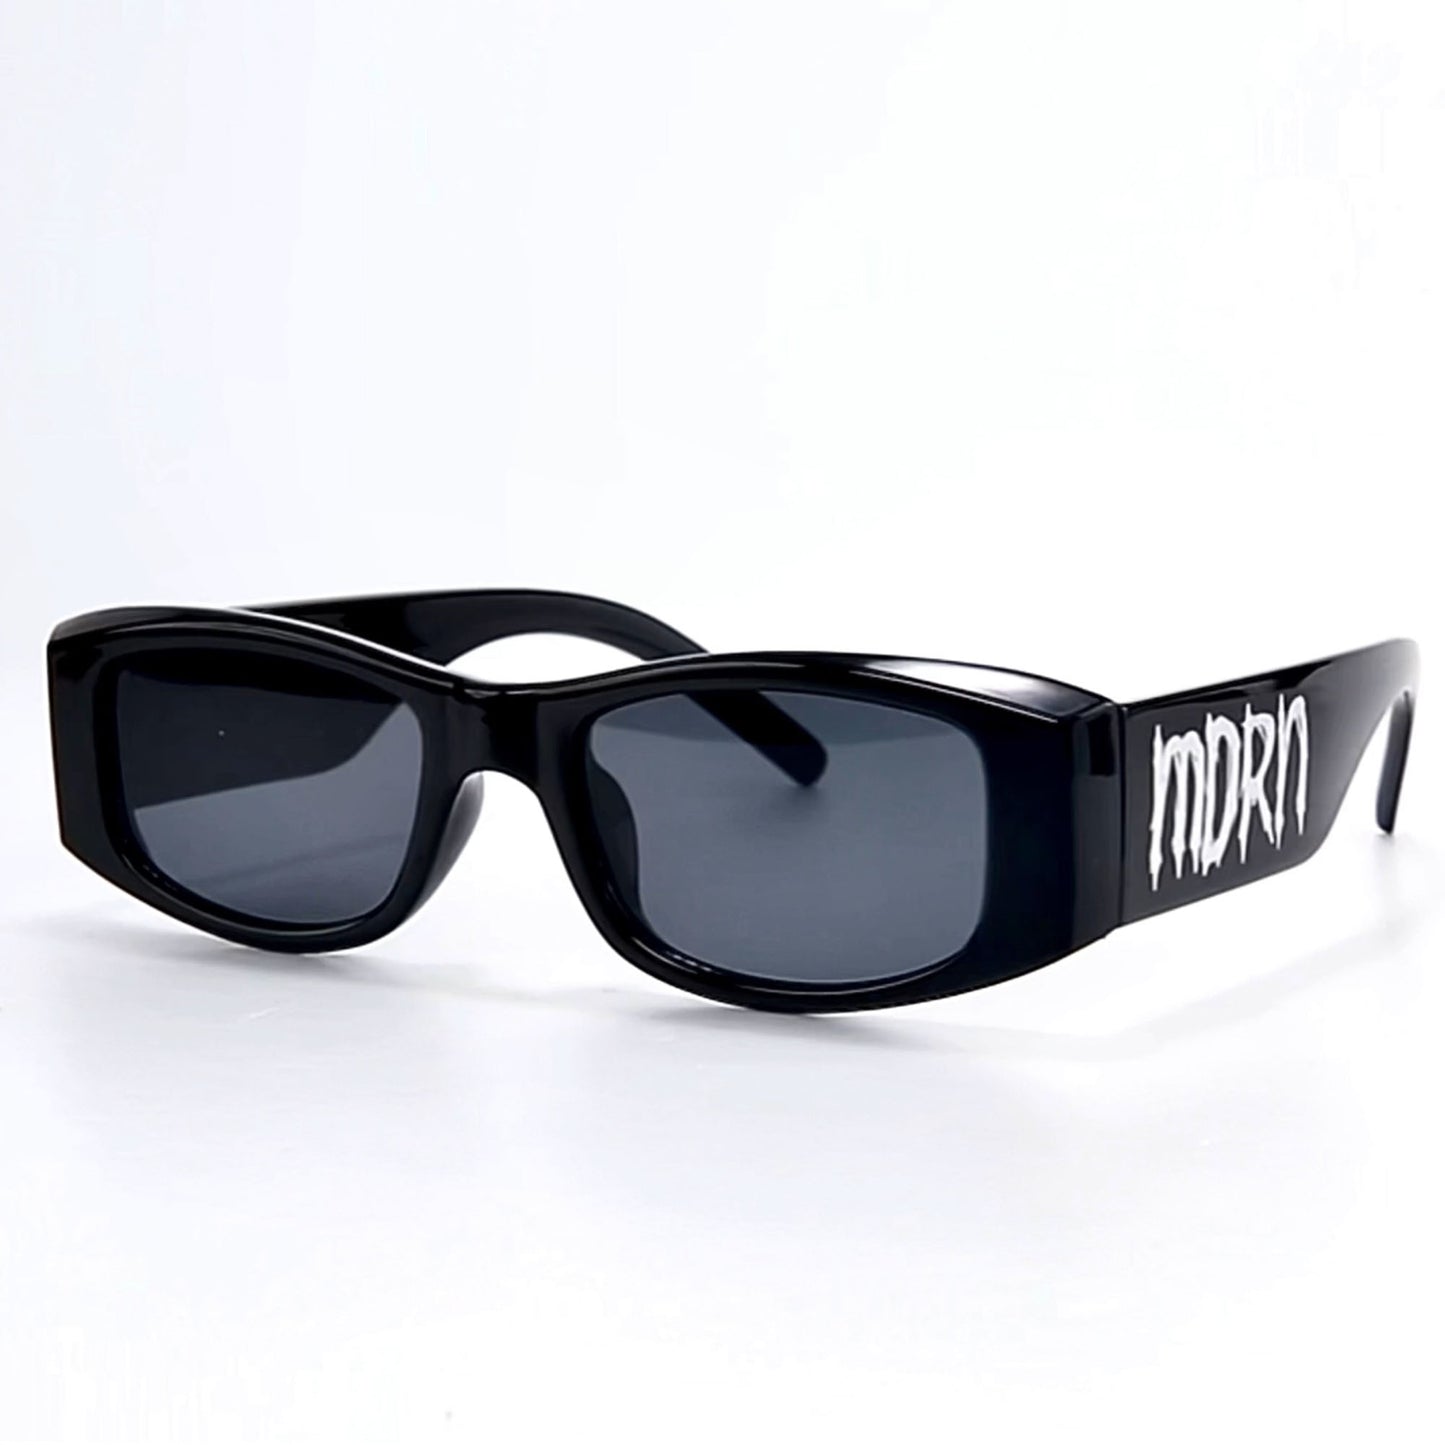 Modern Rockstars - Black "MDRN" sunglasses